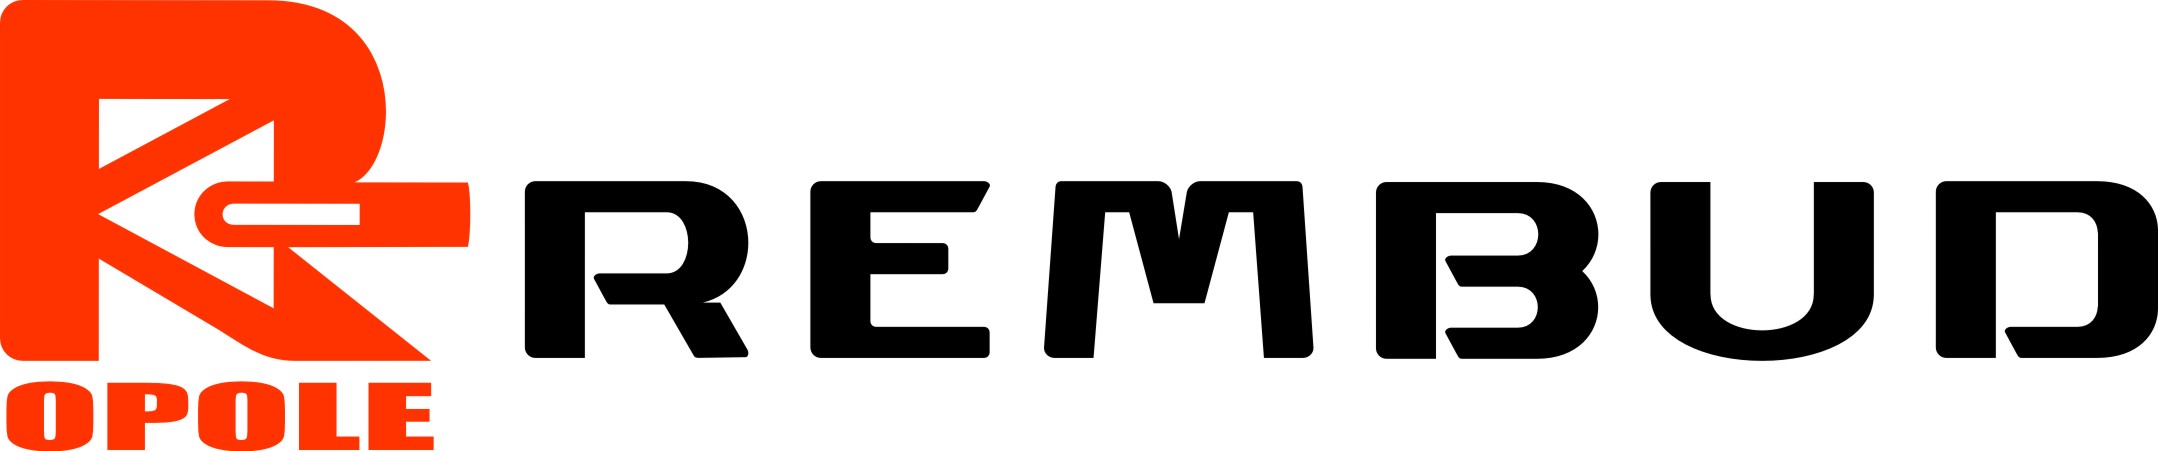 logotyp REMBUD_02